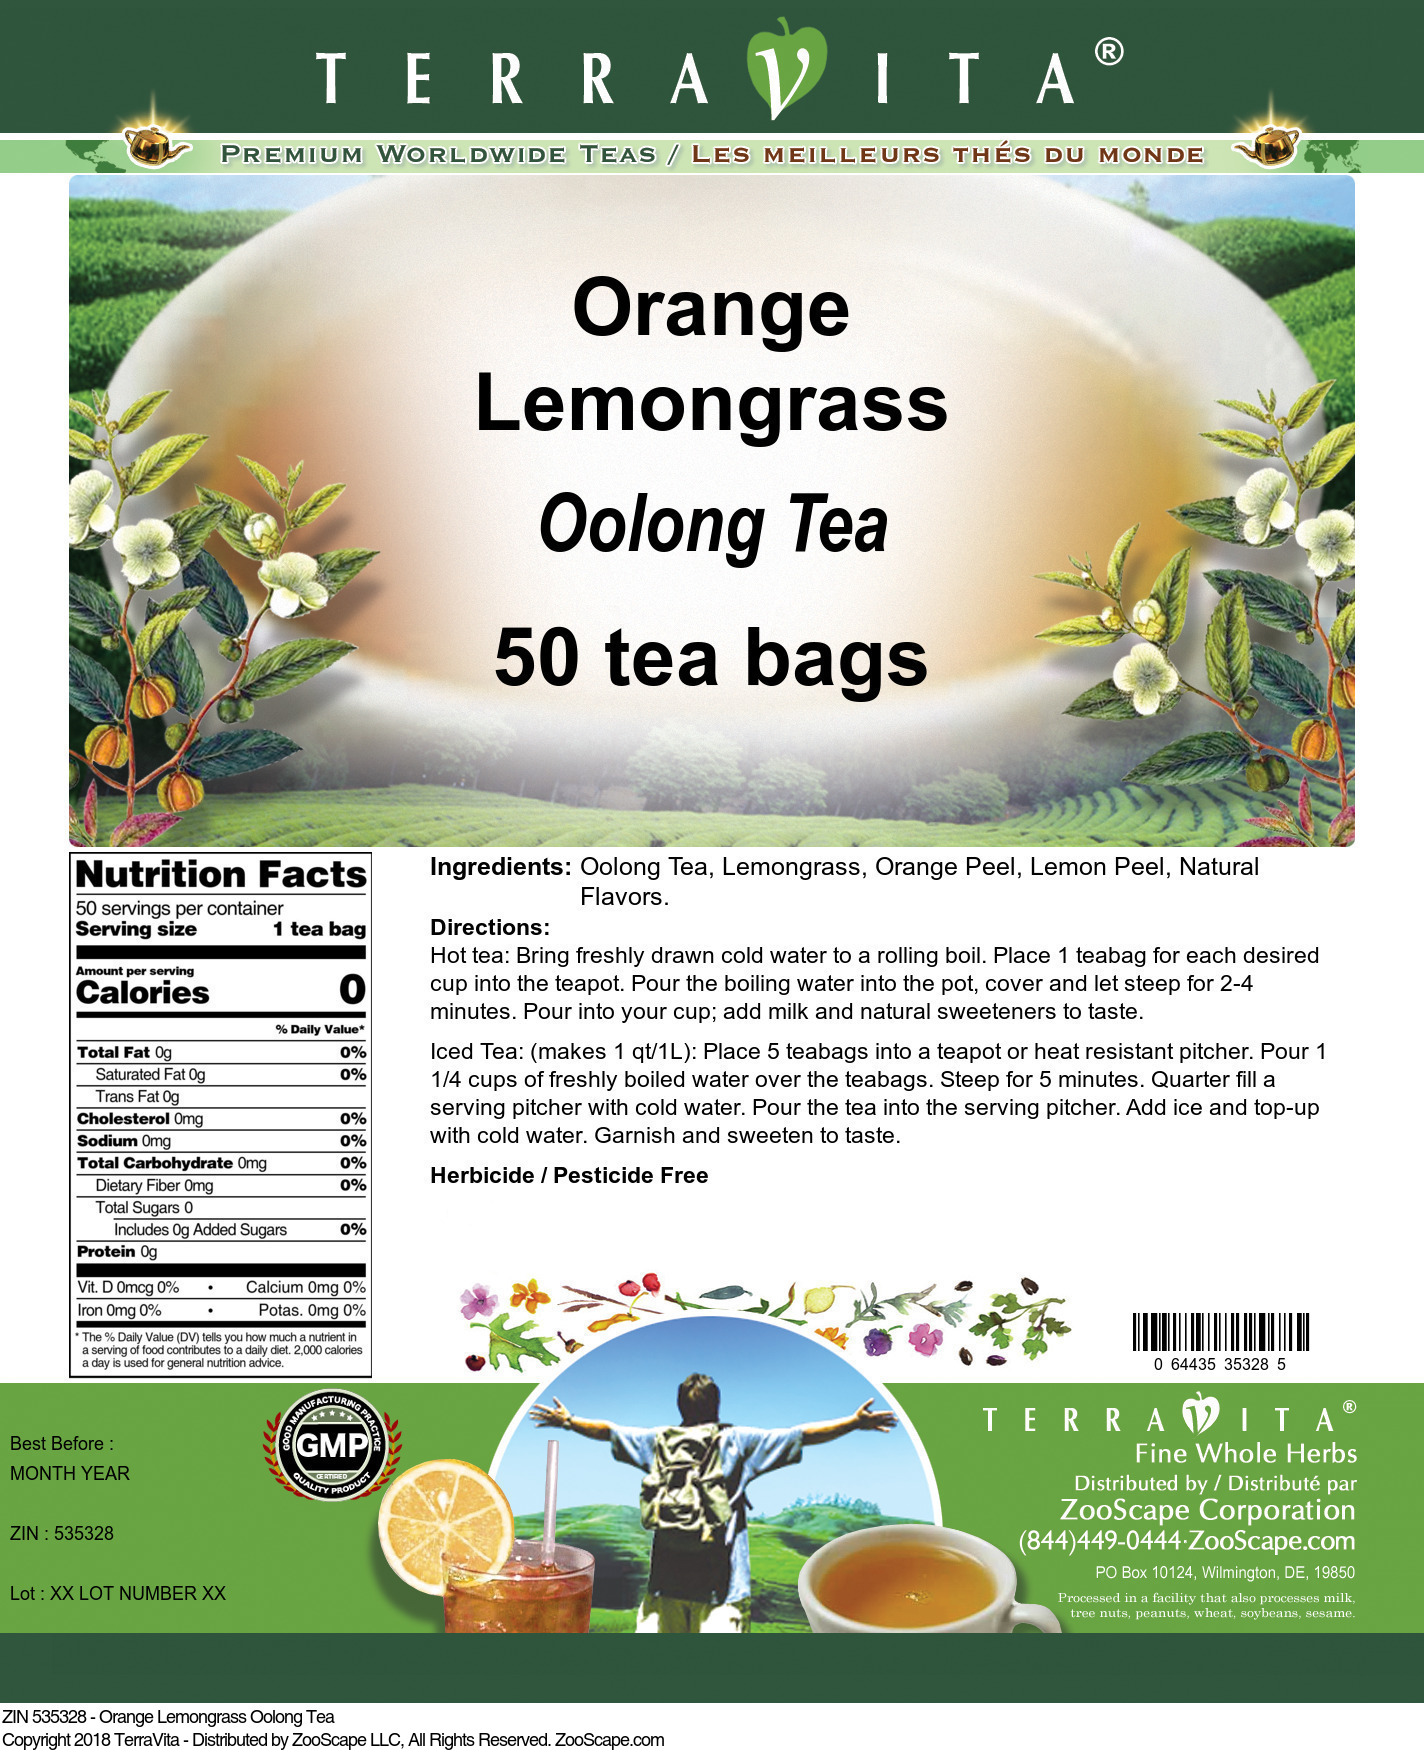 Orange Lemongrass Oolong Tea - Label